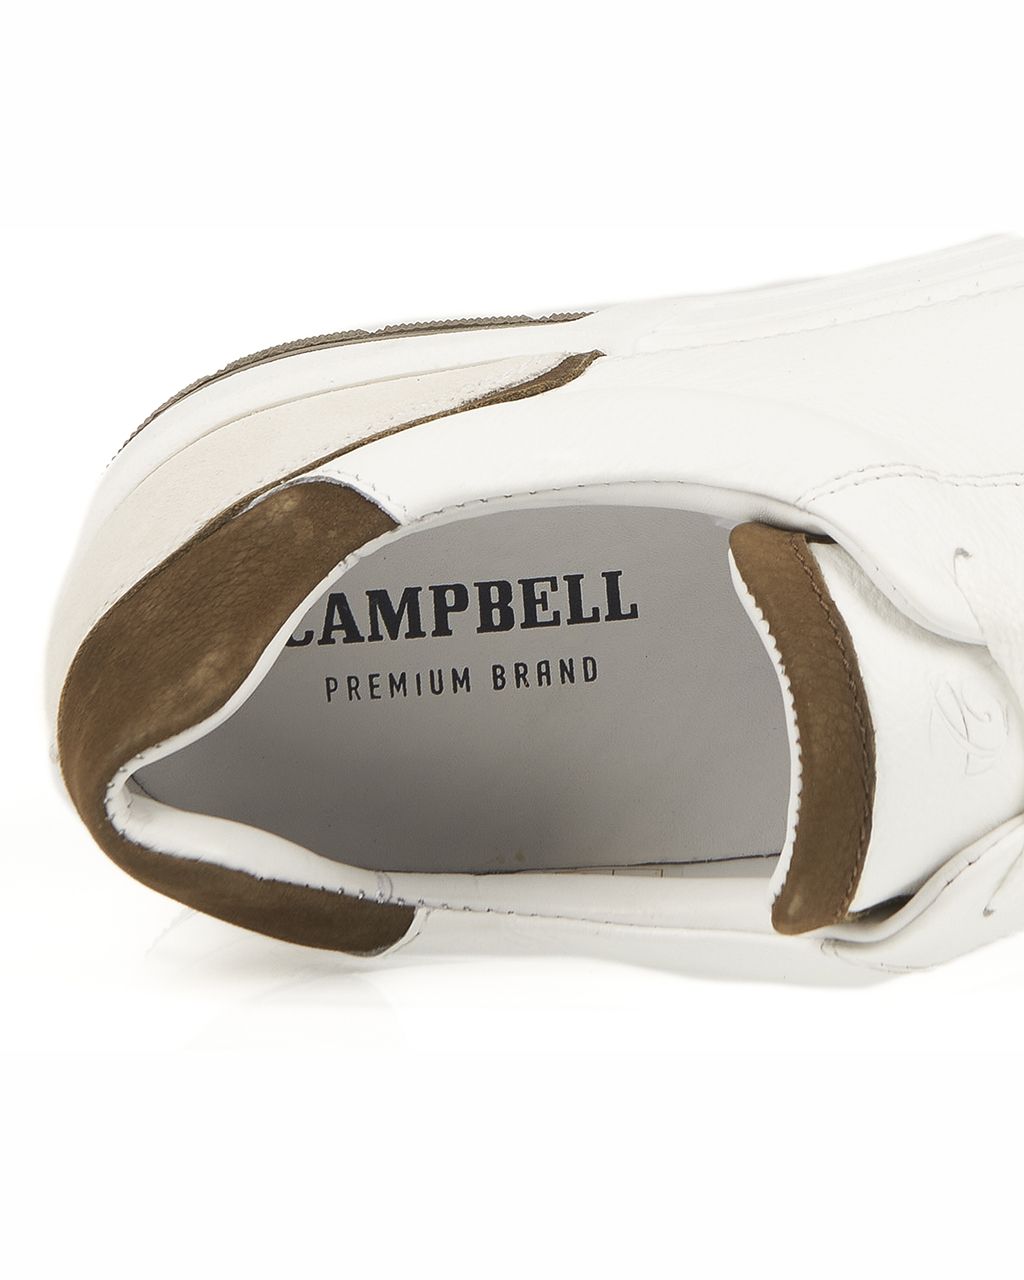 Campbell Classic Sneakers Olijf groen uni 075978-001-40